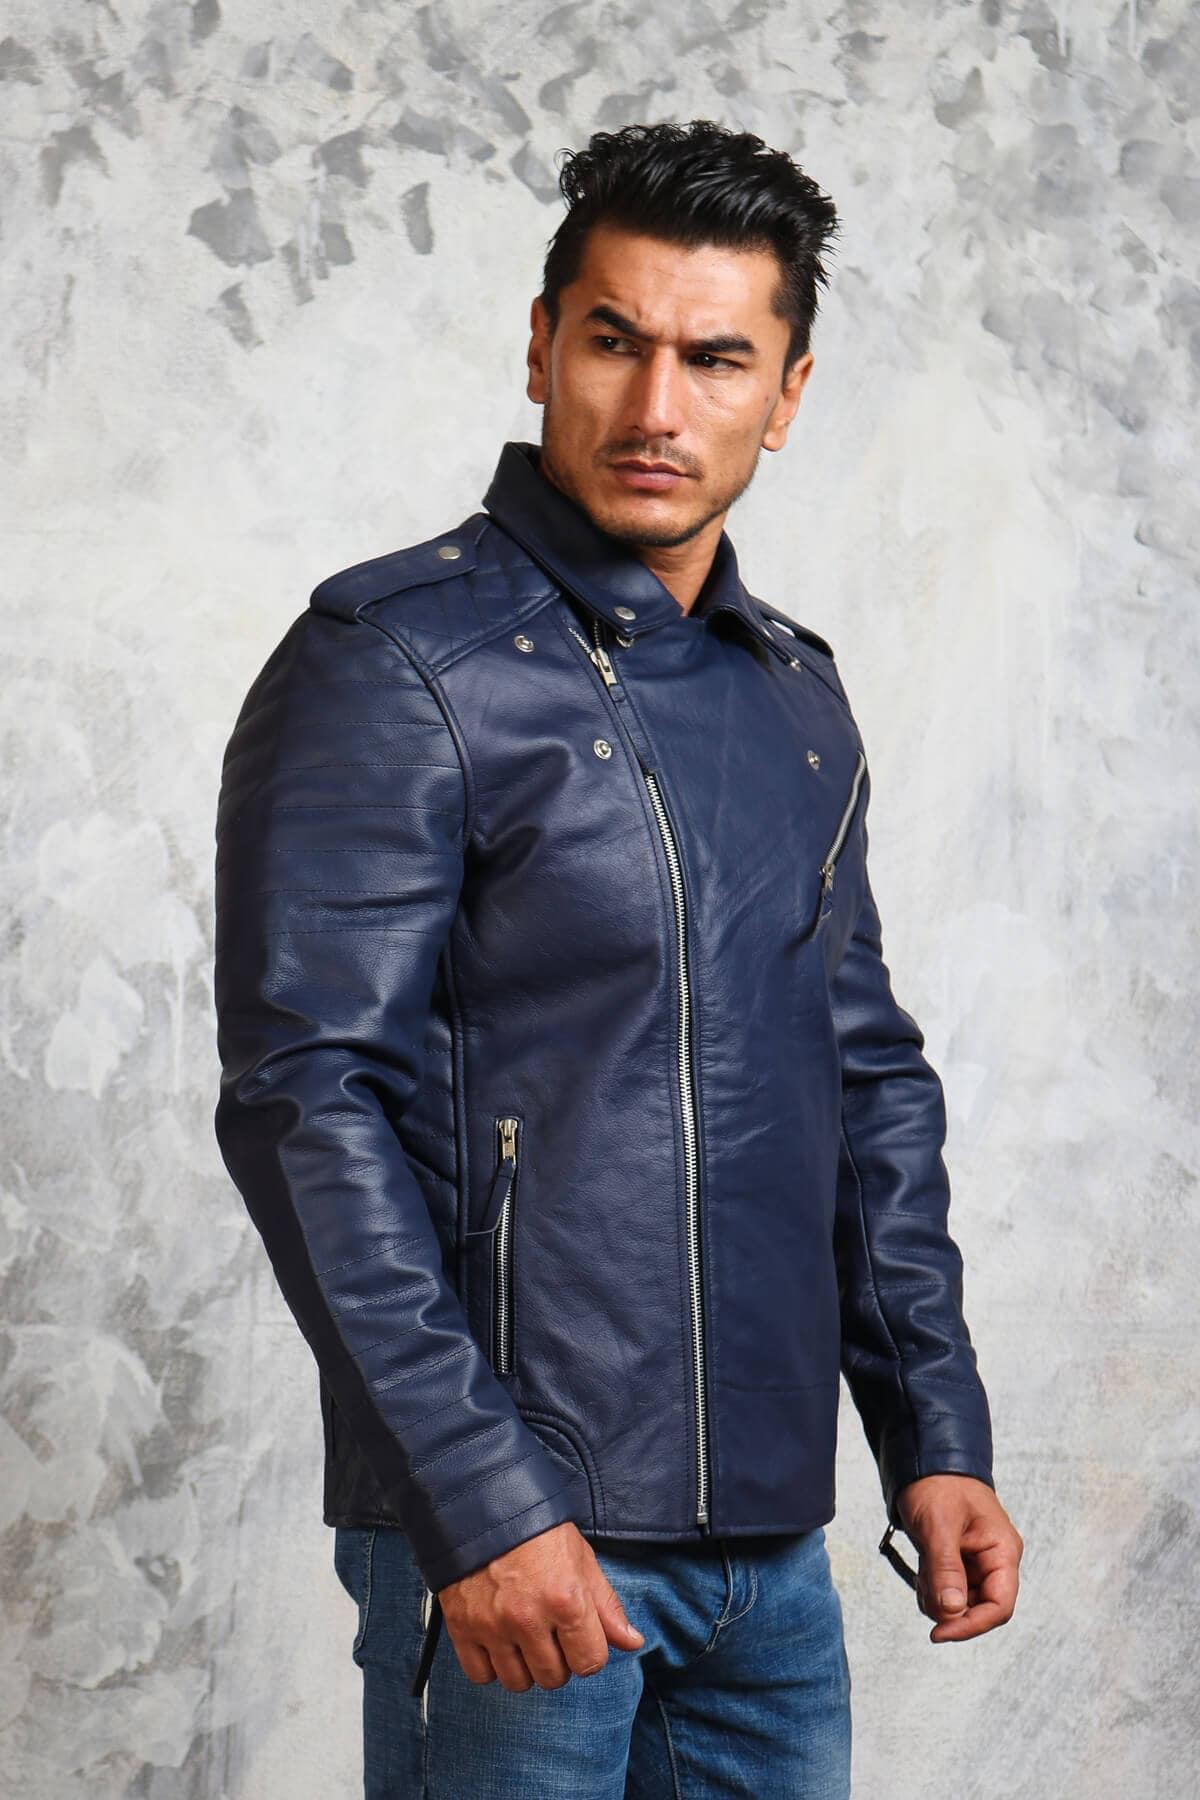 Blue Leather Jacket for Mens - Leather Blue Jacket